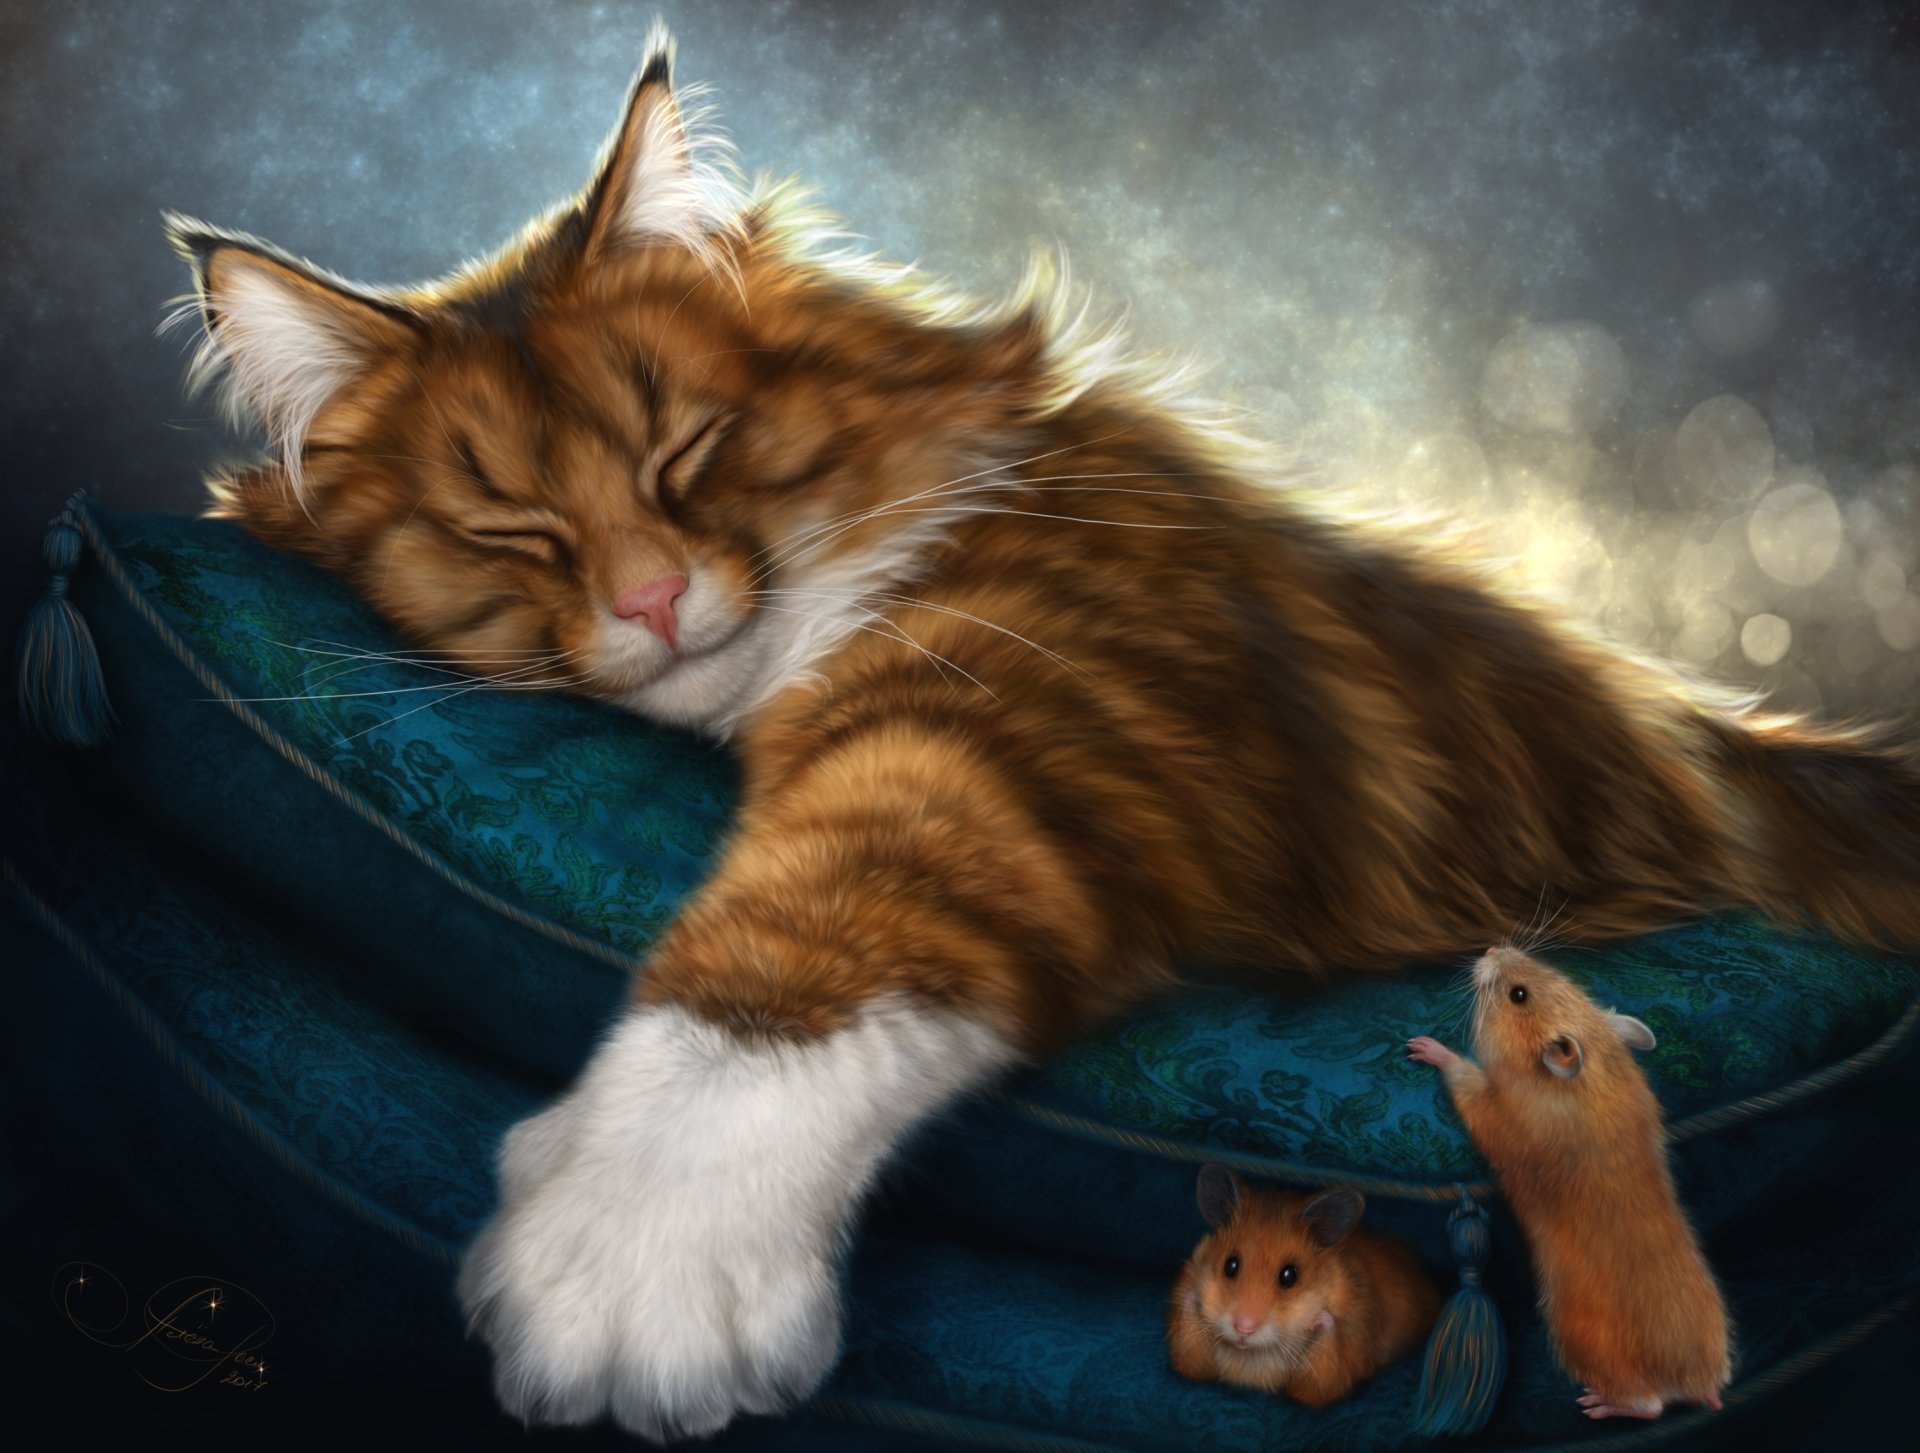 Fantasy Cat HD Wallpaper by Alena Ekaterinburg.